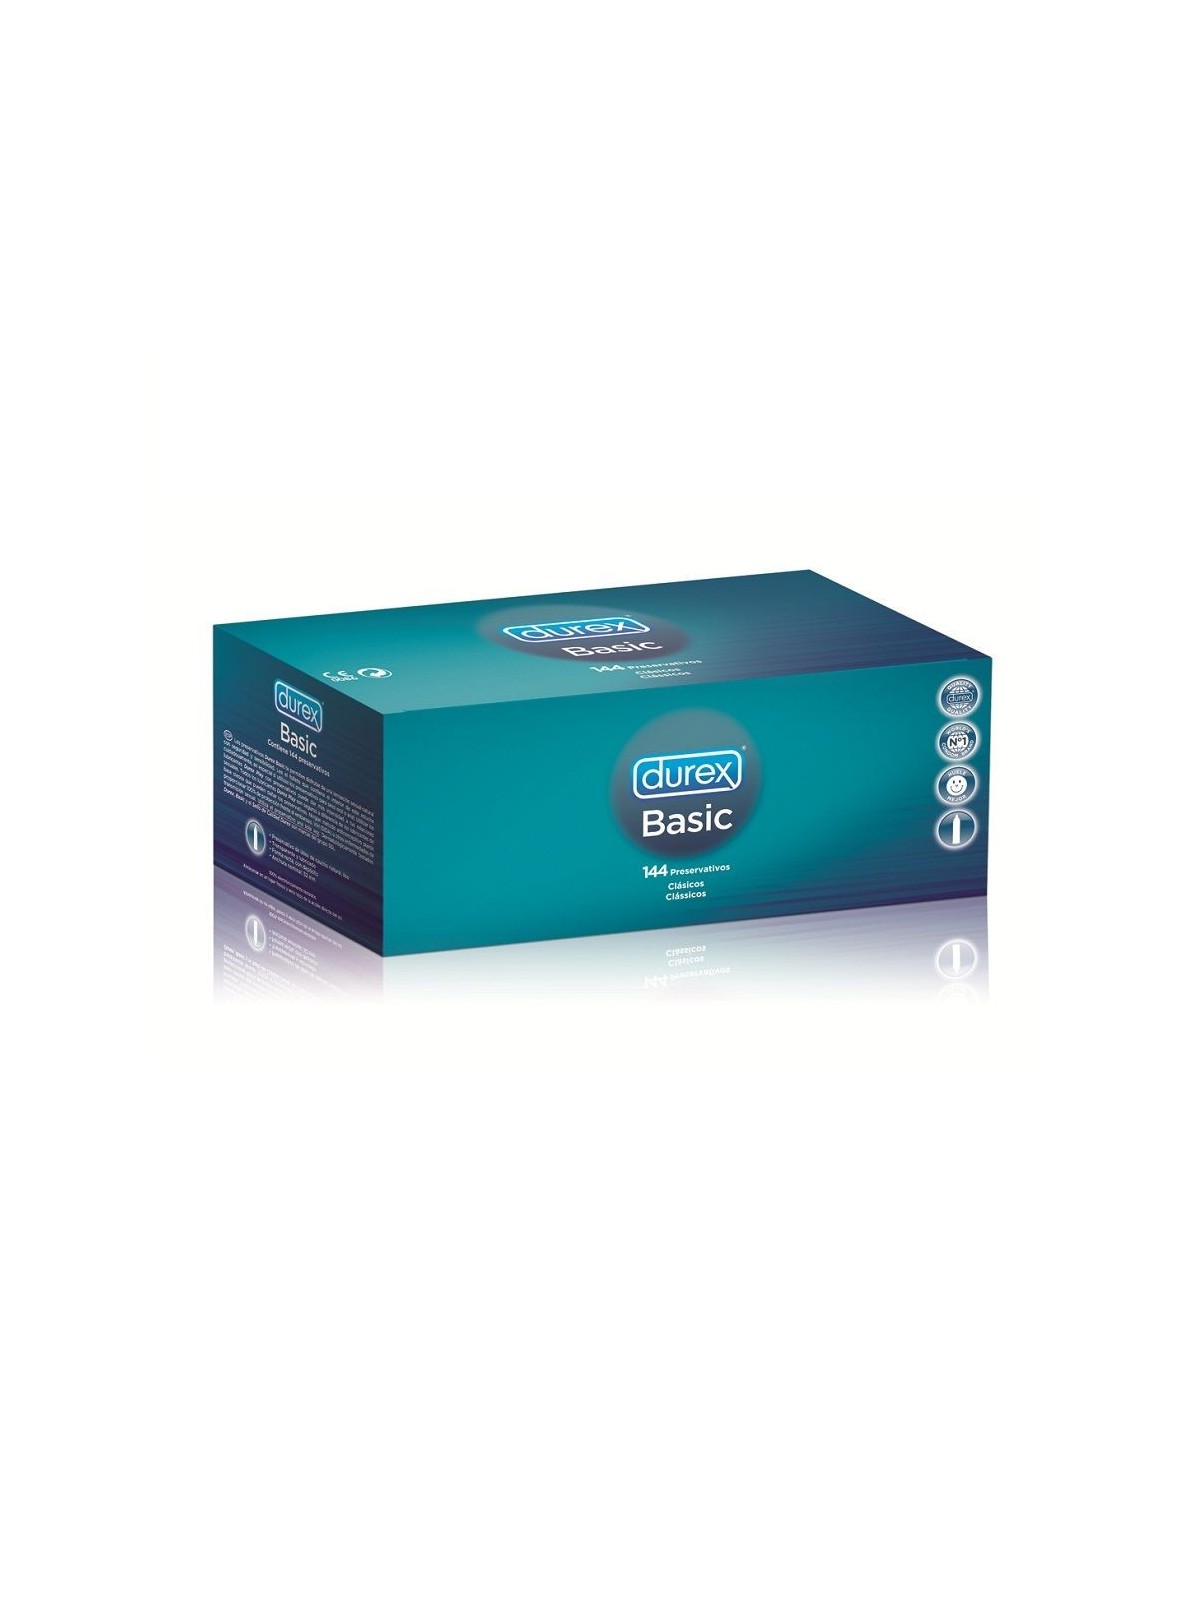 Durex Basic 144 uds - Comprar Condones naturales Durex - Preservativos naturales (1)